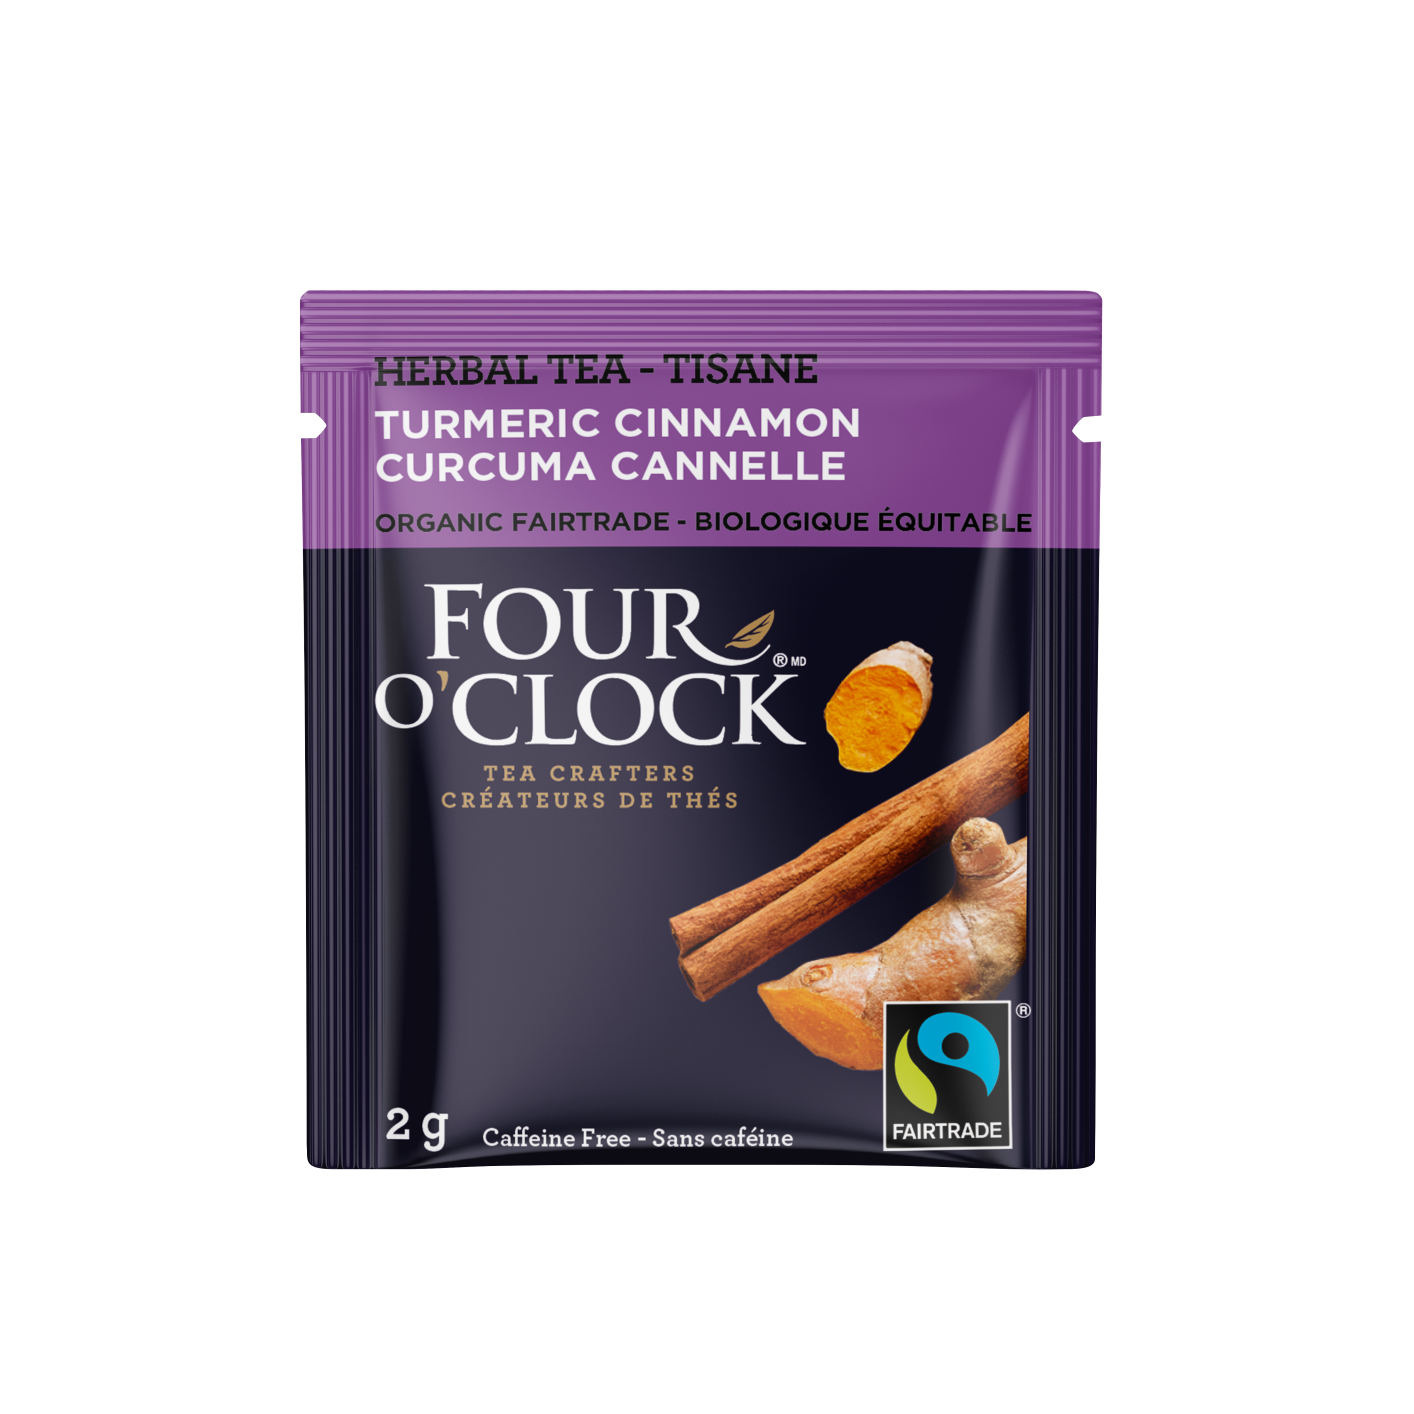 Turmeric Cinnamon Organic Fairtrade Herbal Tea